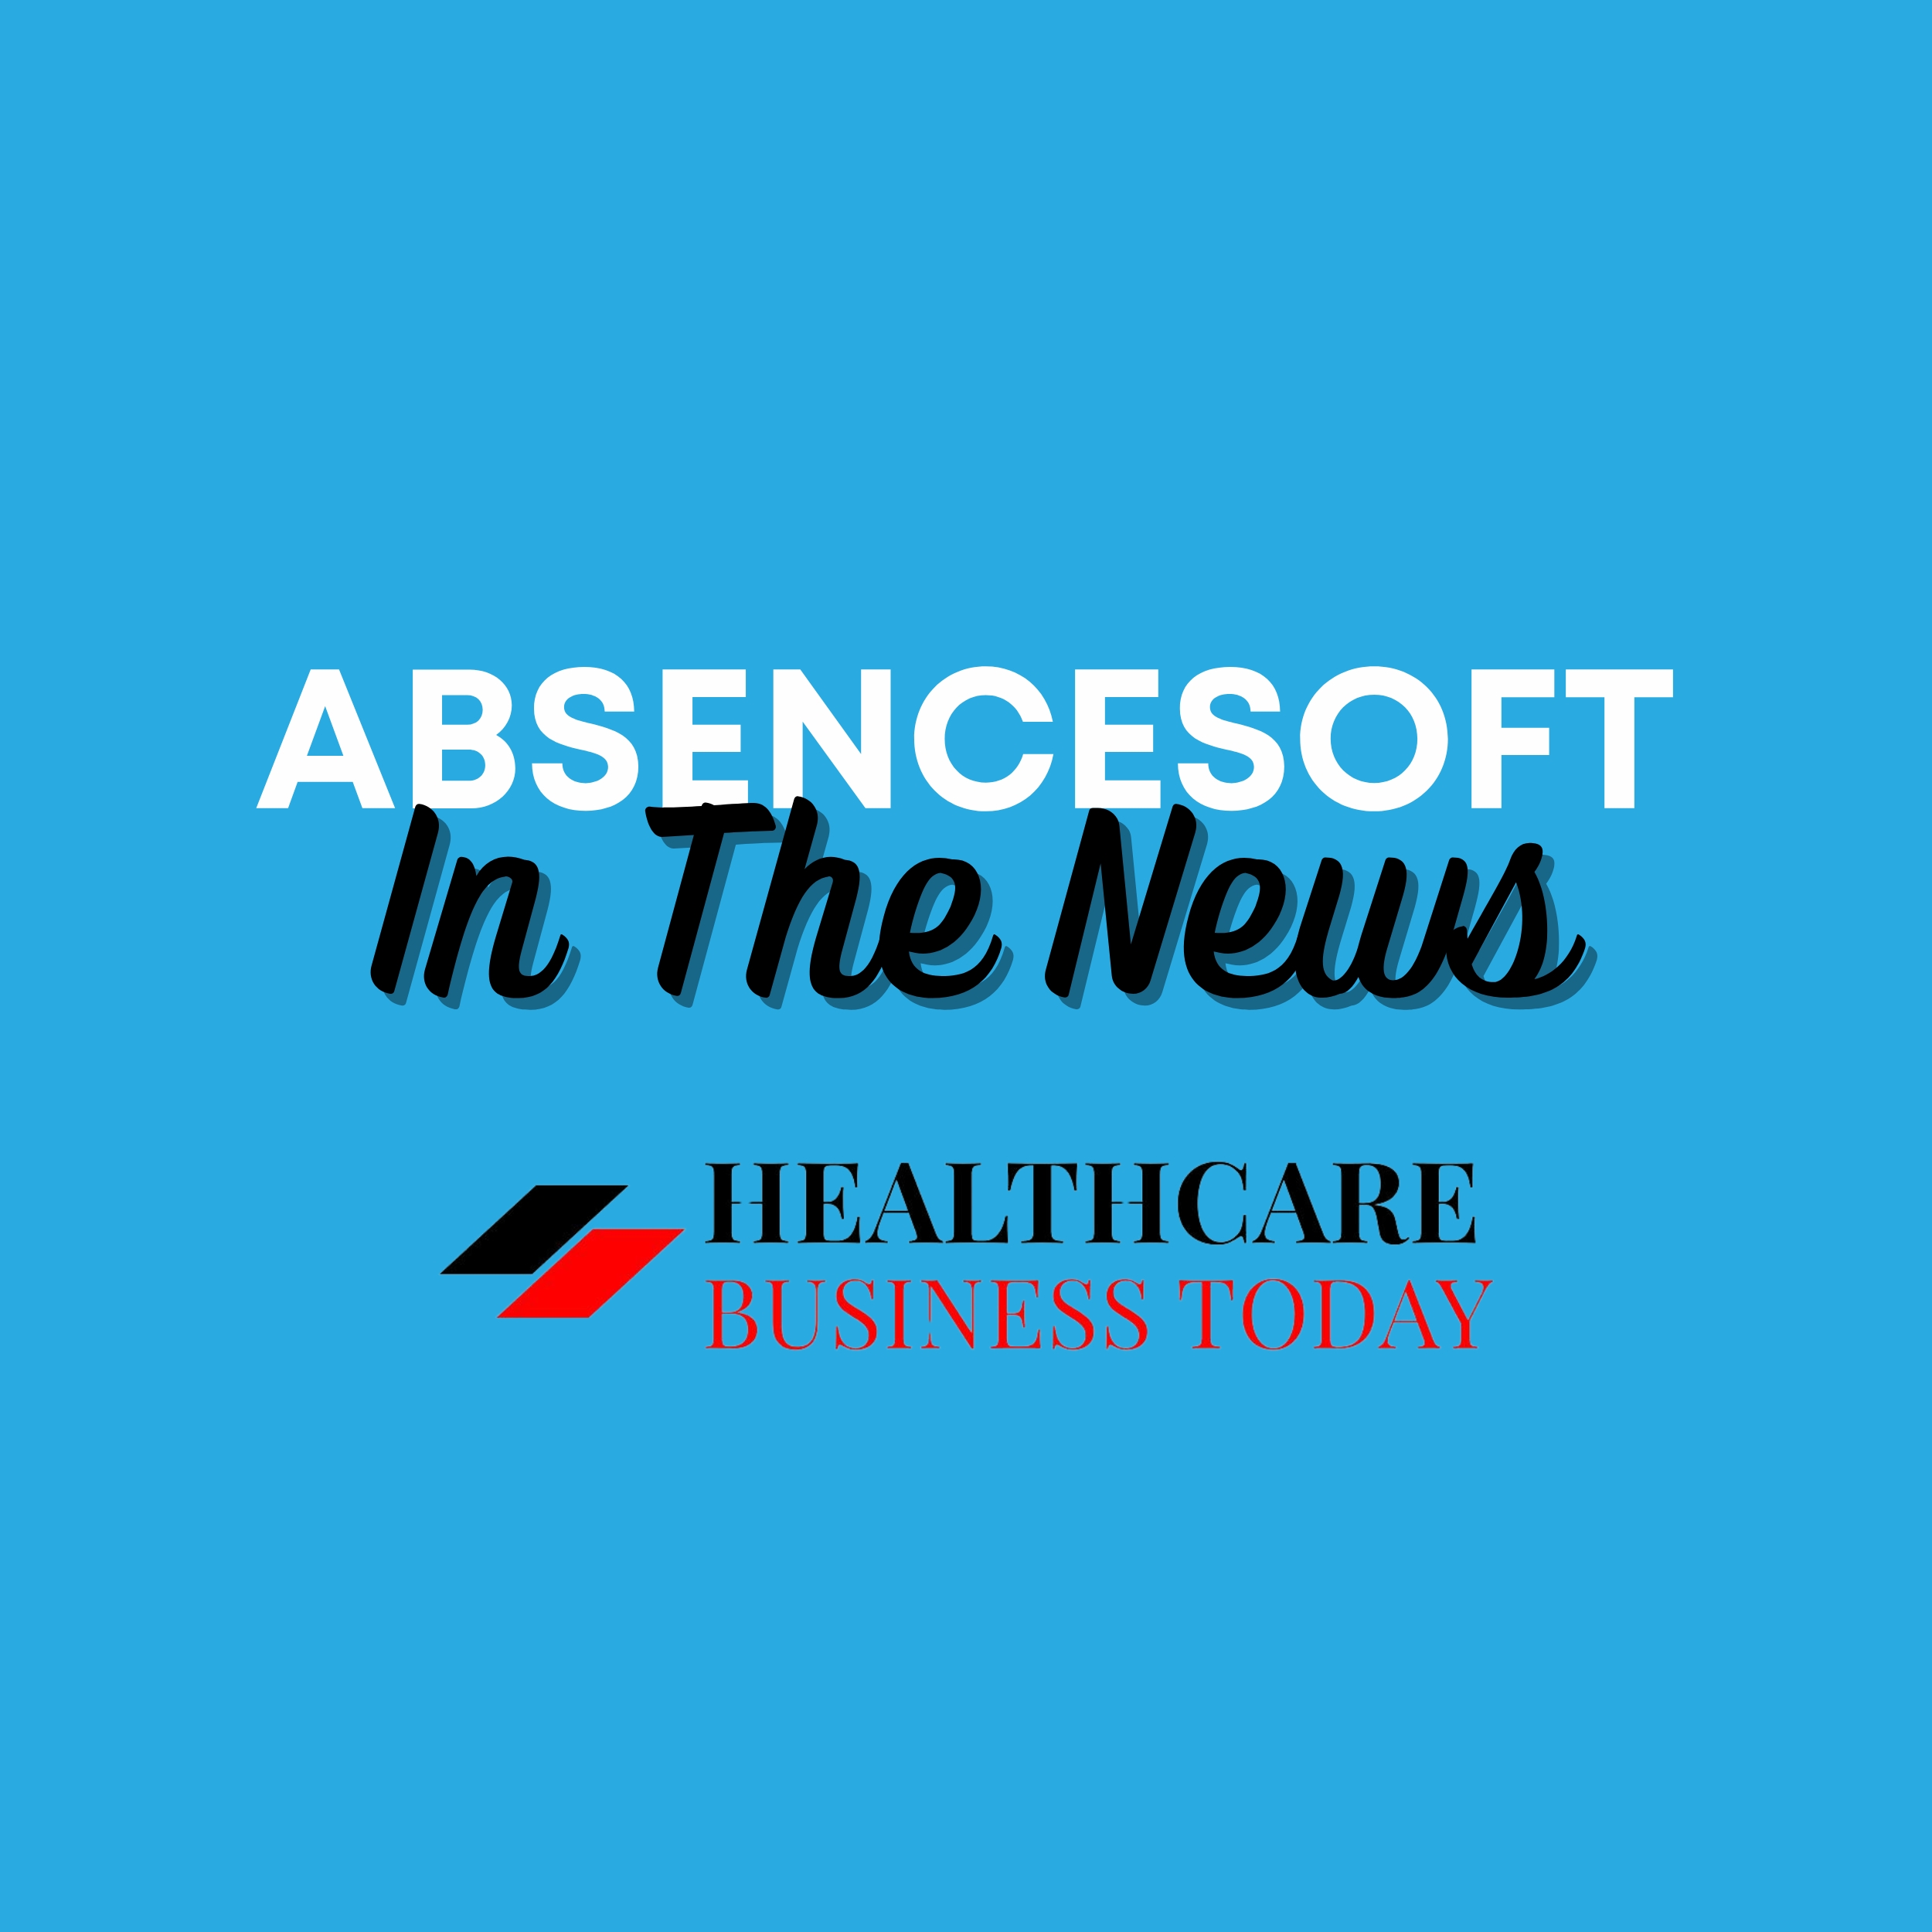 AbsenceSoft’s Seth Turner Byline in Healthcare Business Today